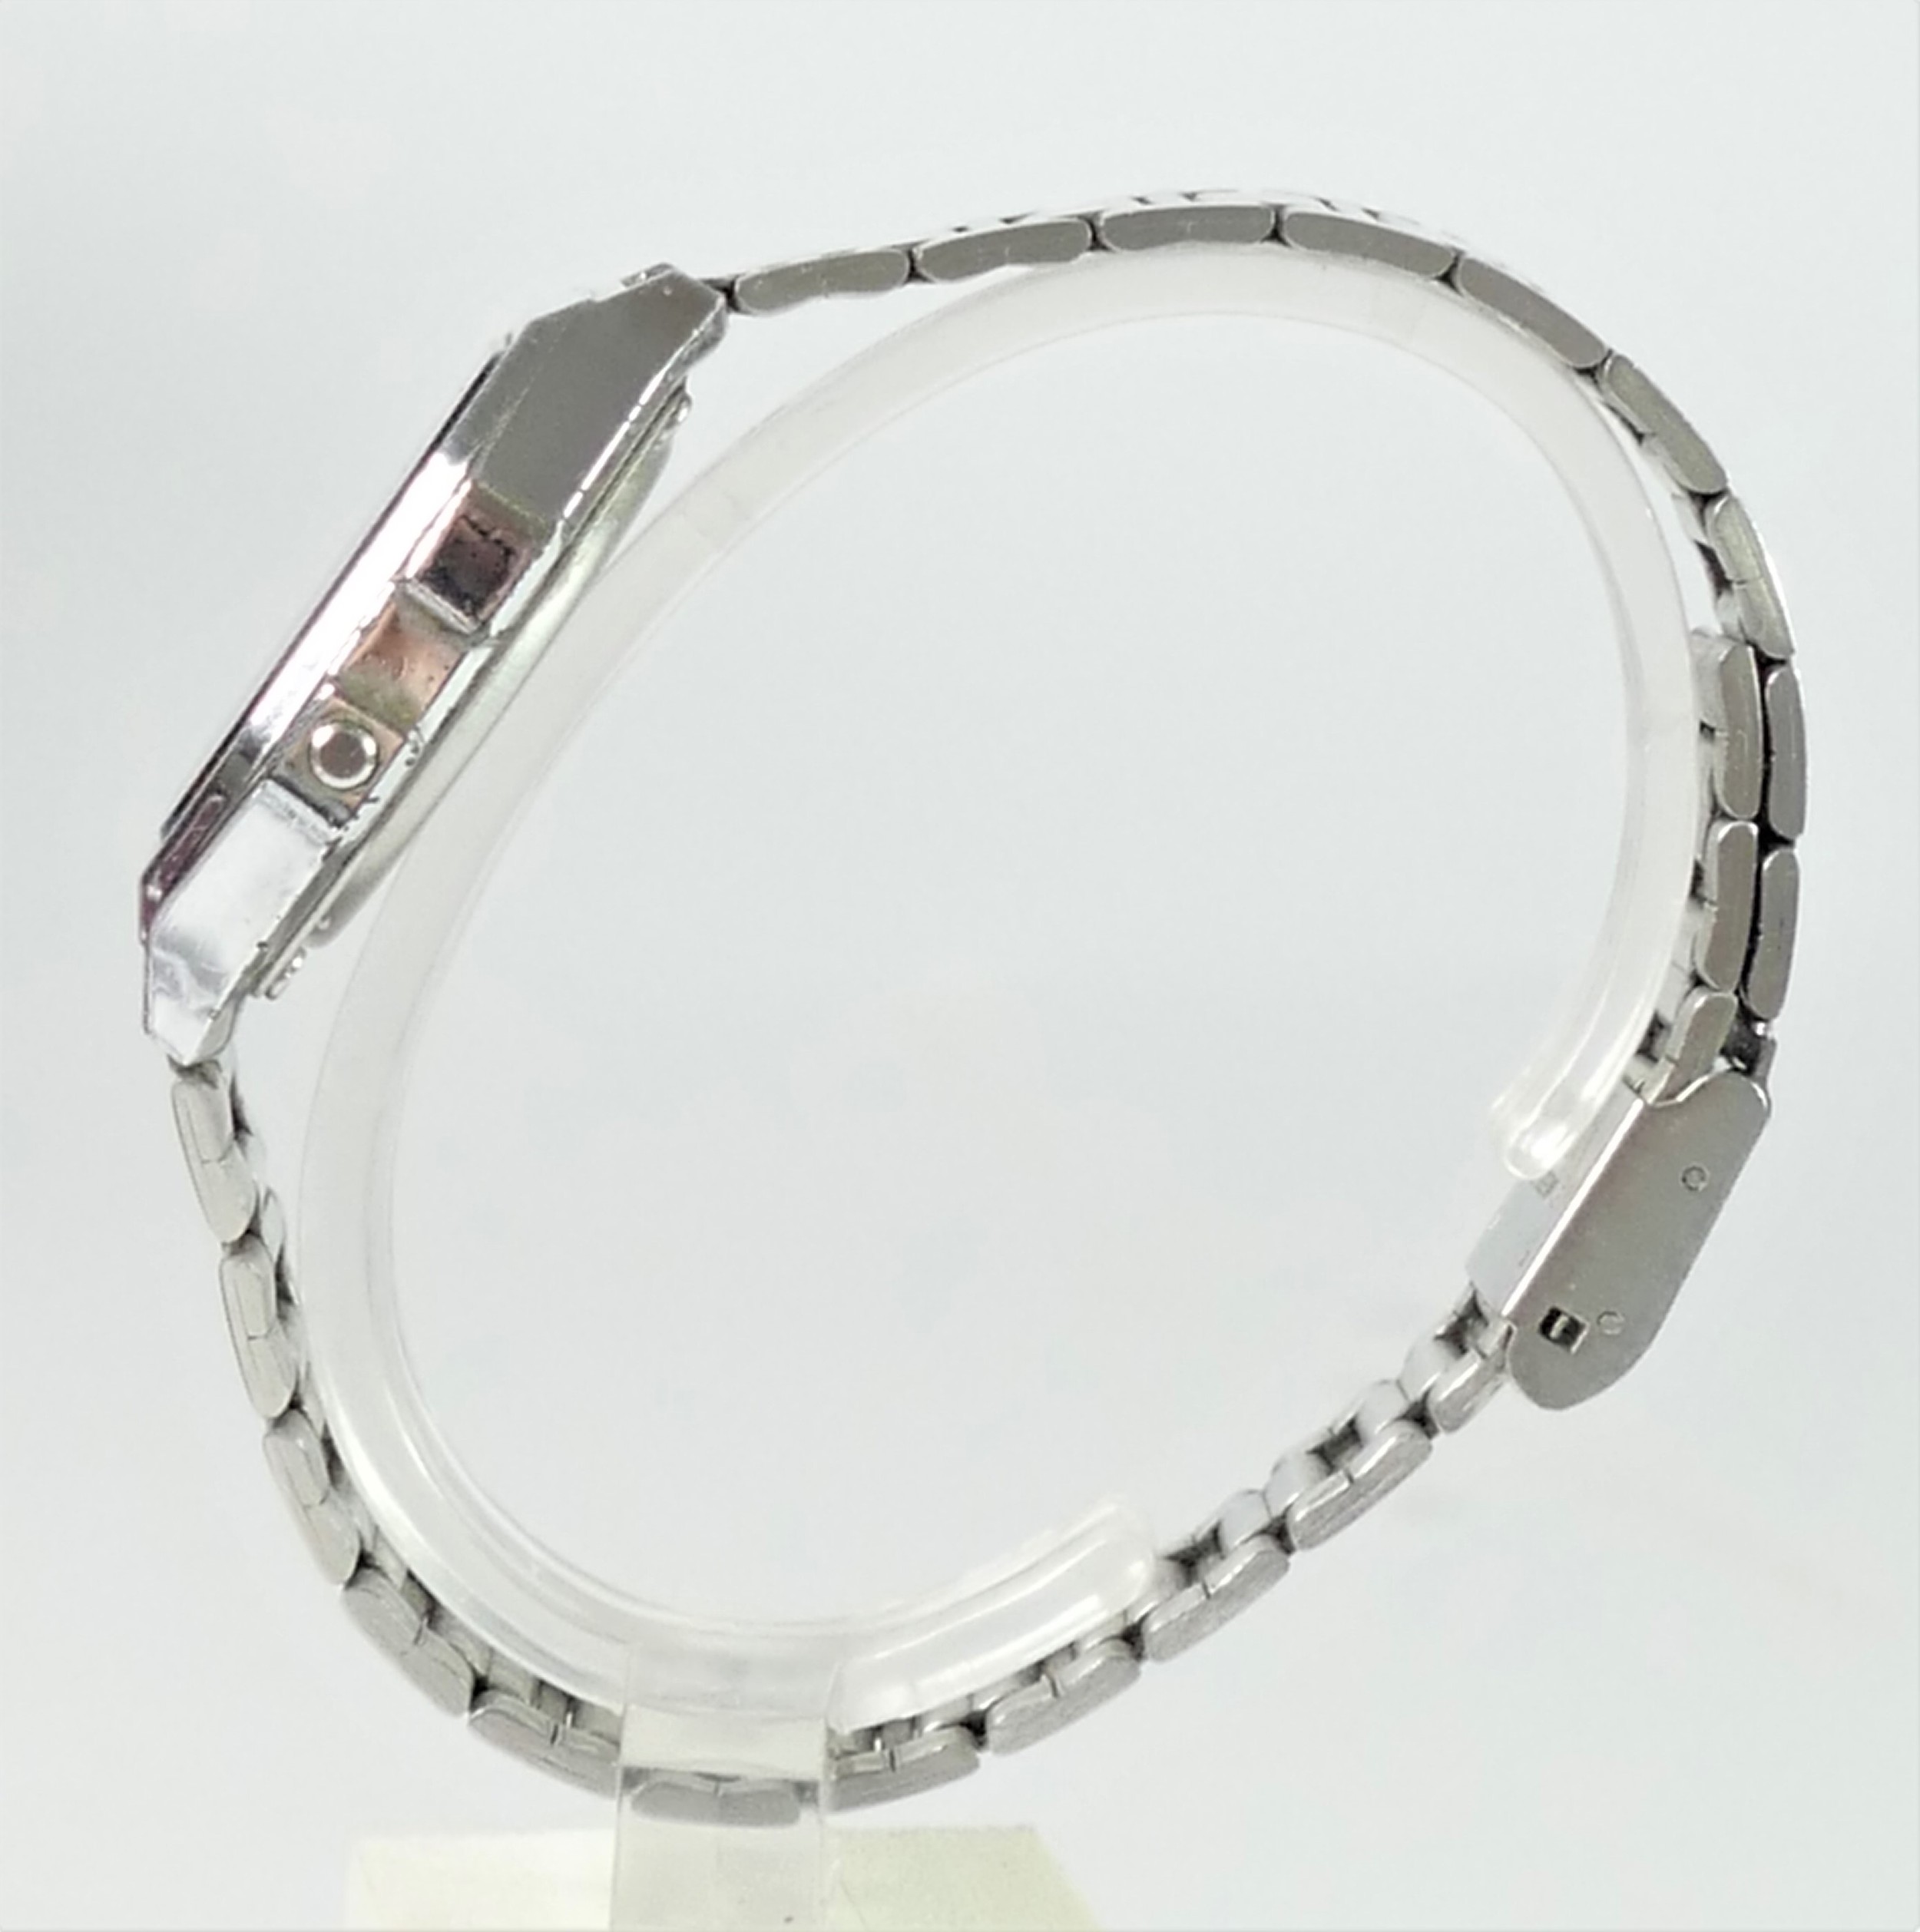 Casio Alarm Chrono, a gentleman's stainless steel digital wristwatch, ref 593, A158W, original - Image 3 of 7